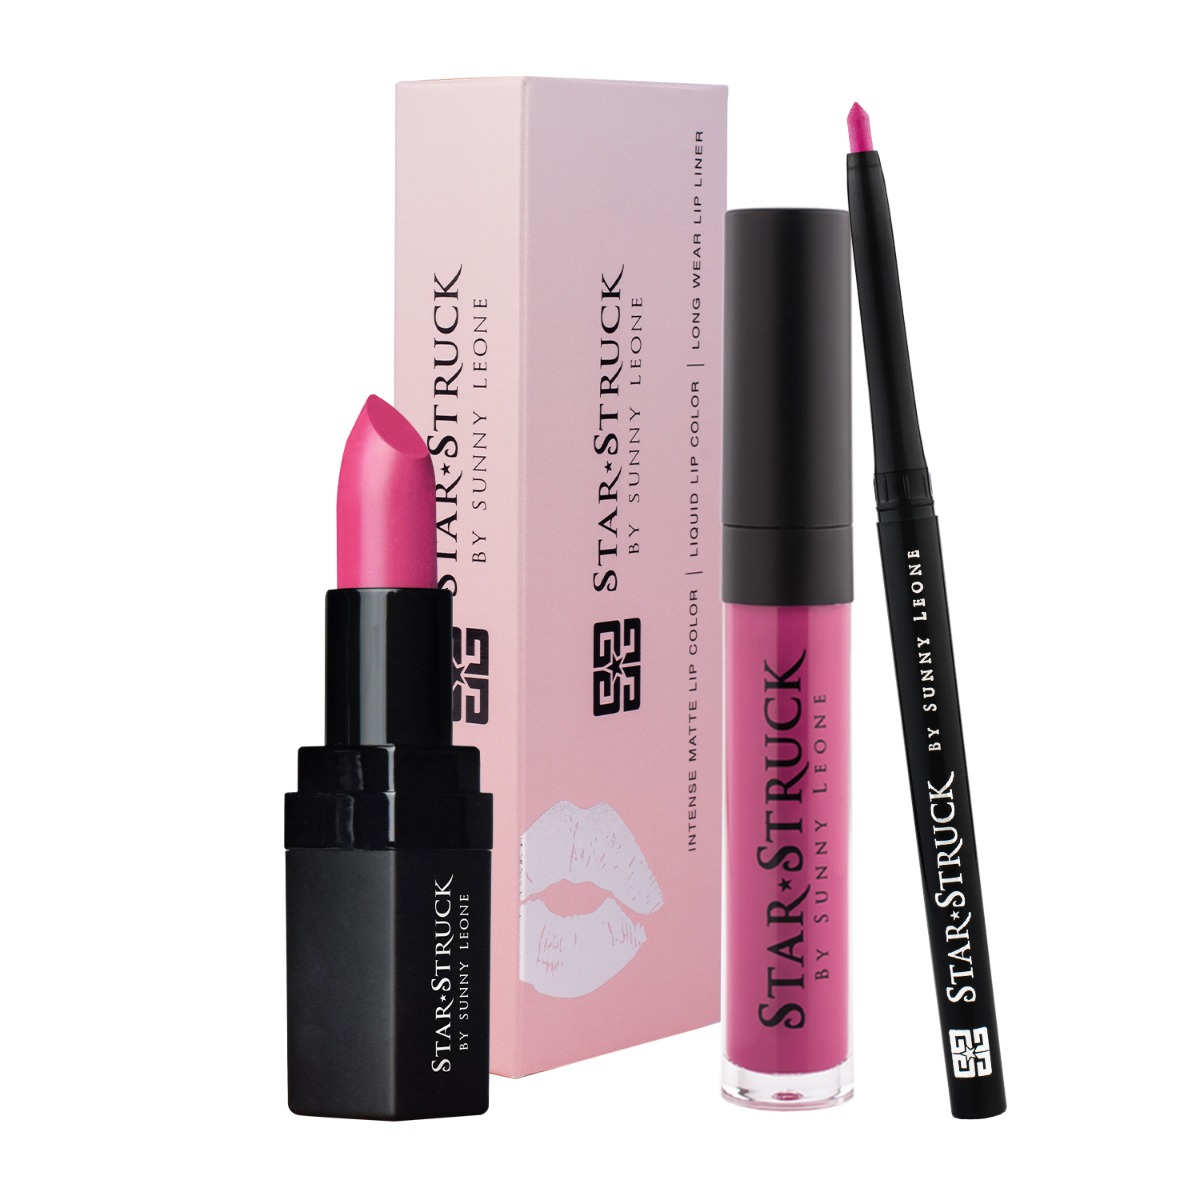 Star Struck by Sunny Leone Kiss Me Pink 3PC Lip Kit - Lipstick, 4.45gm + Lip Gloss, 5.5ml + Lip Liner, 0.25gm Combo